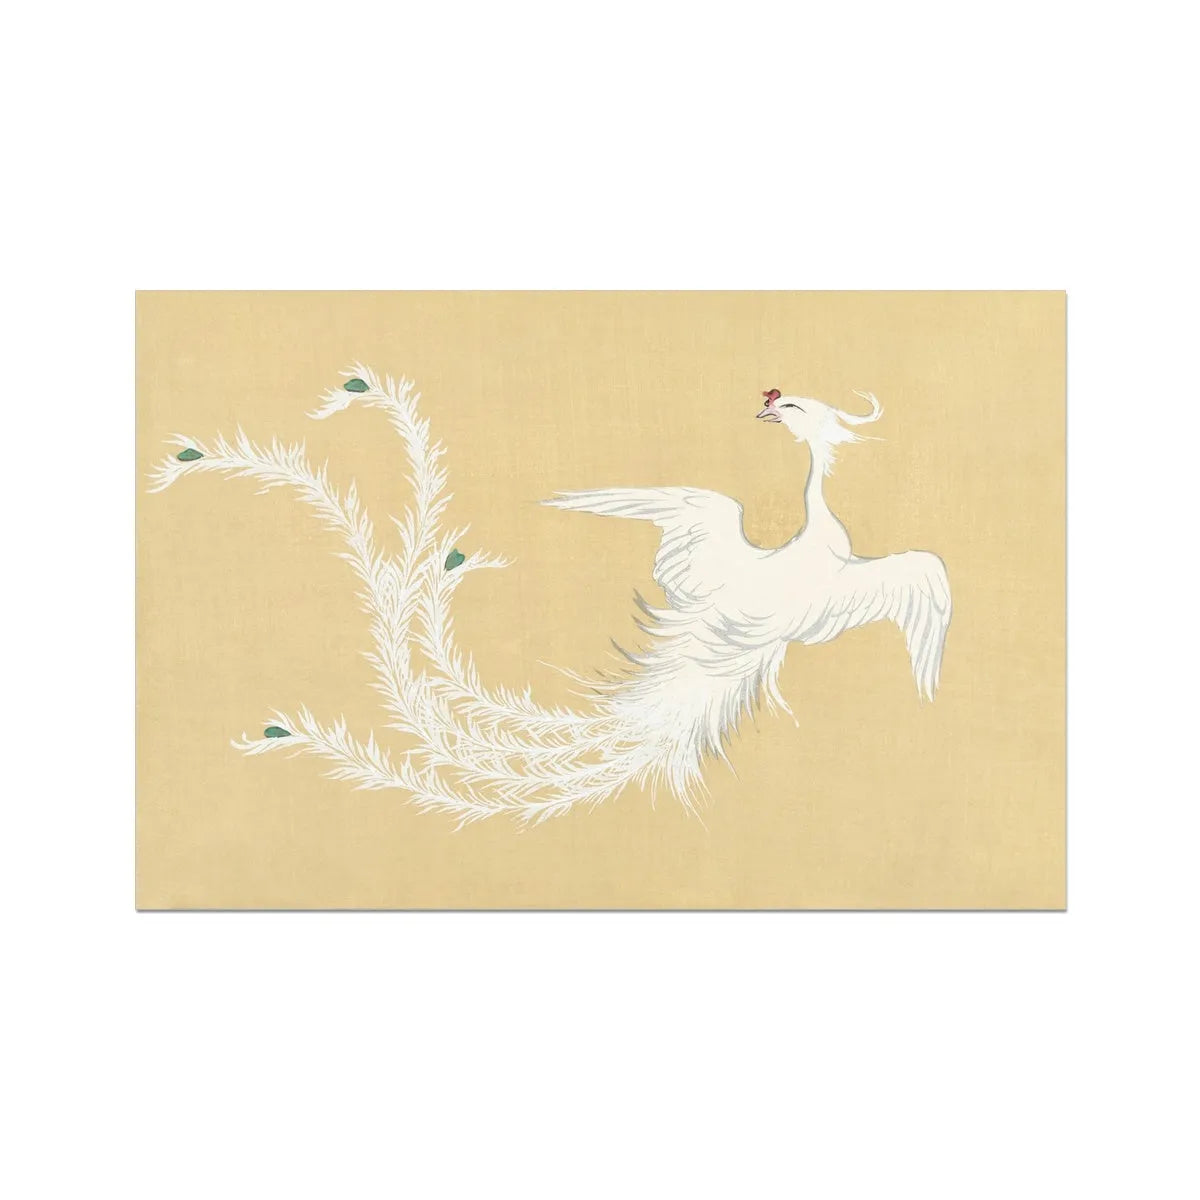 Phoenix By Kamisaka Sekka Fine Art Print - 30’x20’ - Posters Prints & Visual Artwork - Aesthetic Art